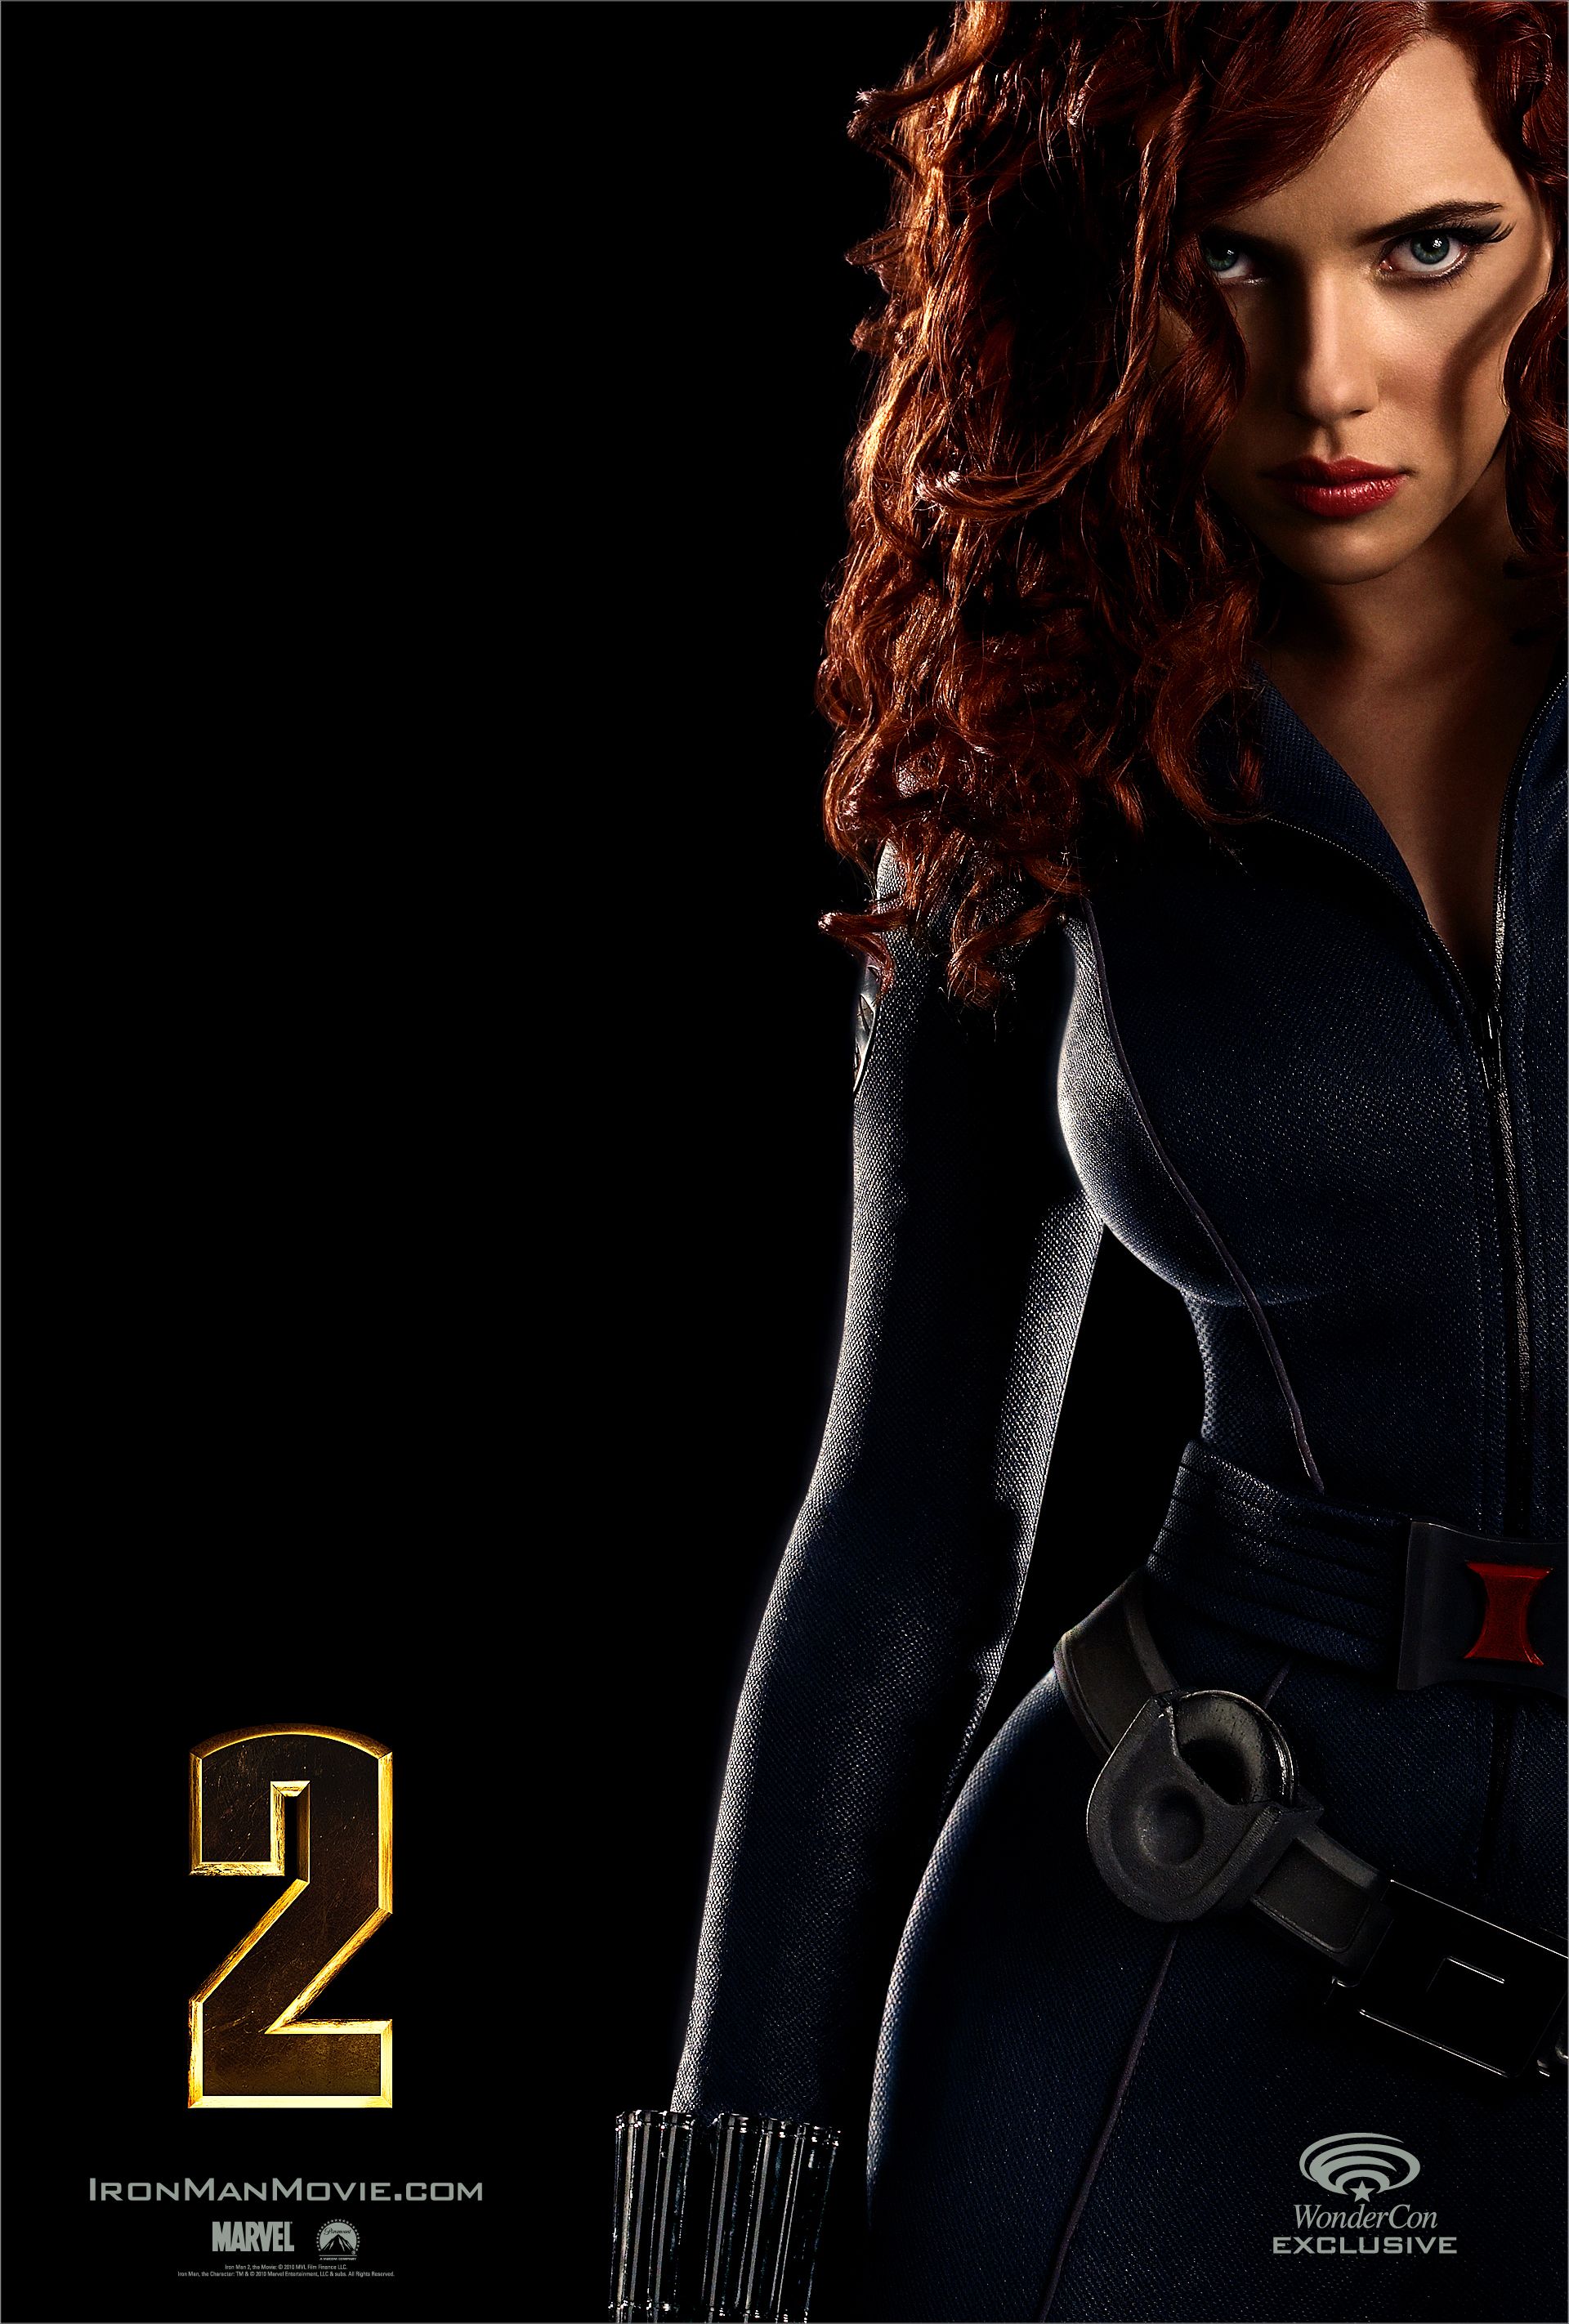 3 New Iron Man 2 Images Plus The Wonder Con Mini Poster Of Scarlett 